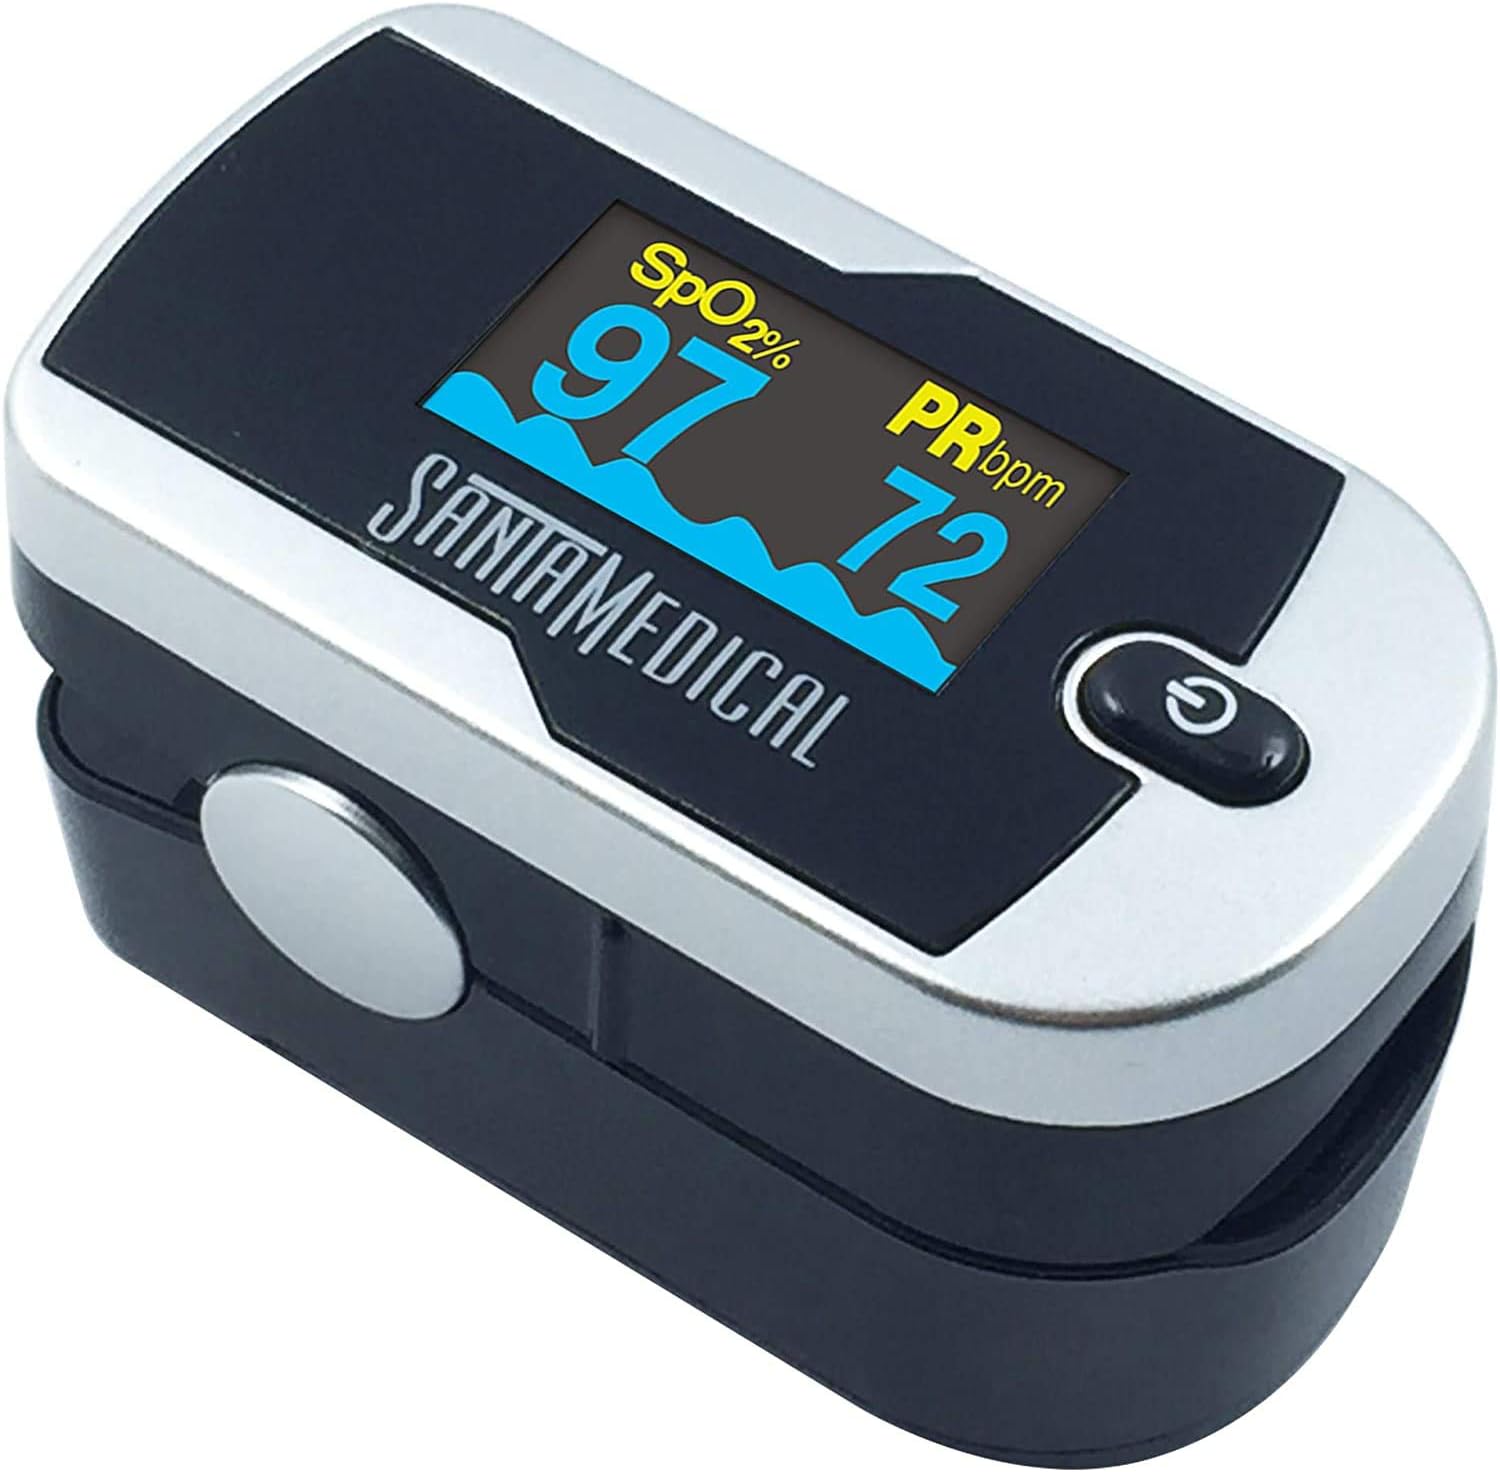 Santamedical Generation 2 Fingertip Pulse Oximeter [...]